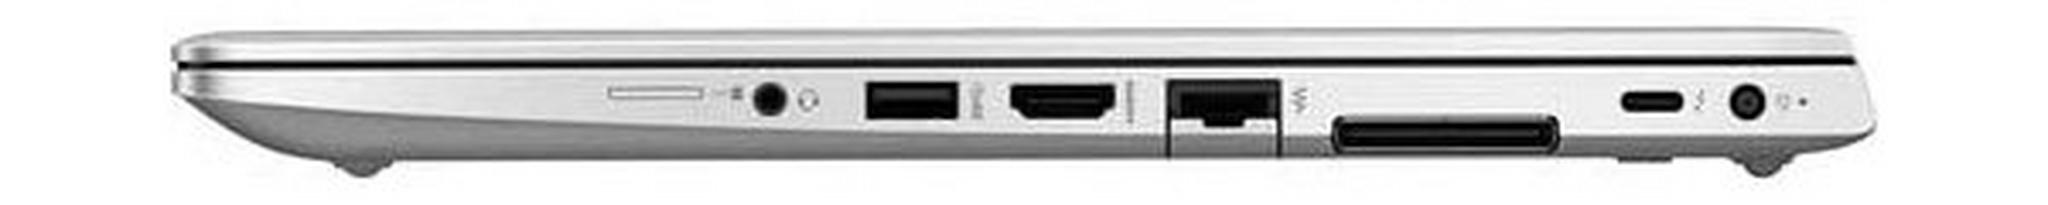 HP EliteBook 840 Core i5 8GB RAM 256GB SSD 14" SMB Laptop (8MJ68EA#ABV) - Silver